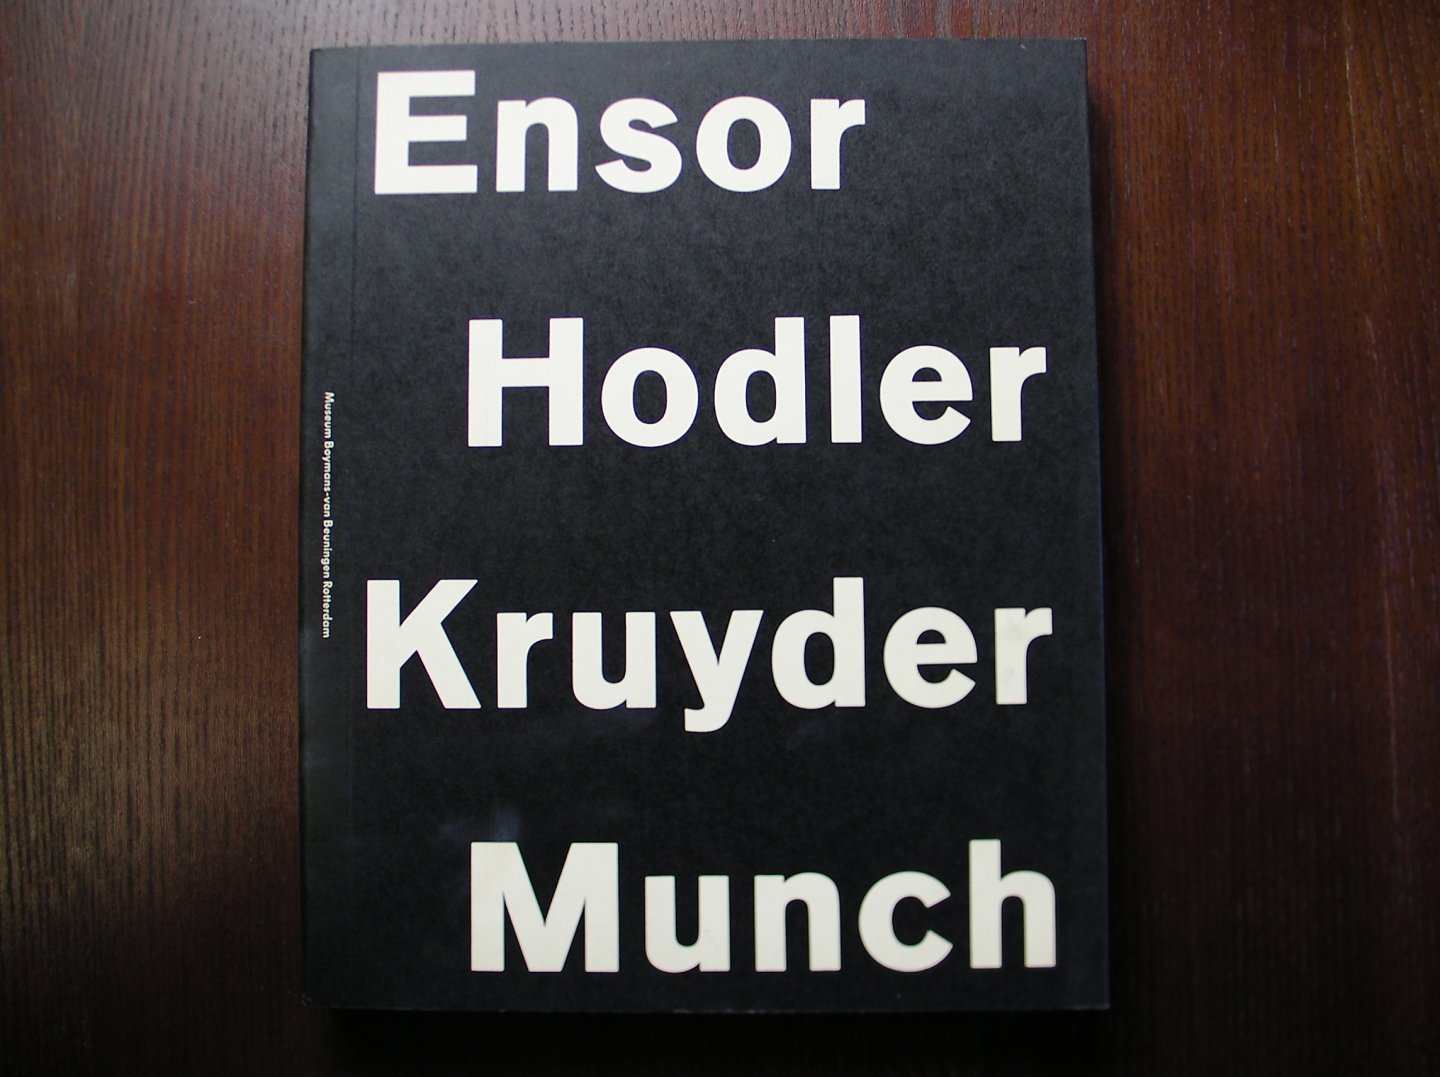  - Ensor Hodler Kruyder Munch